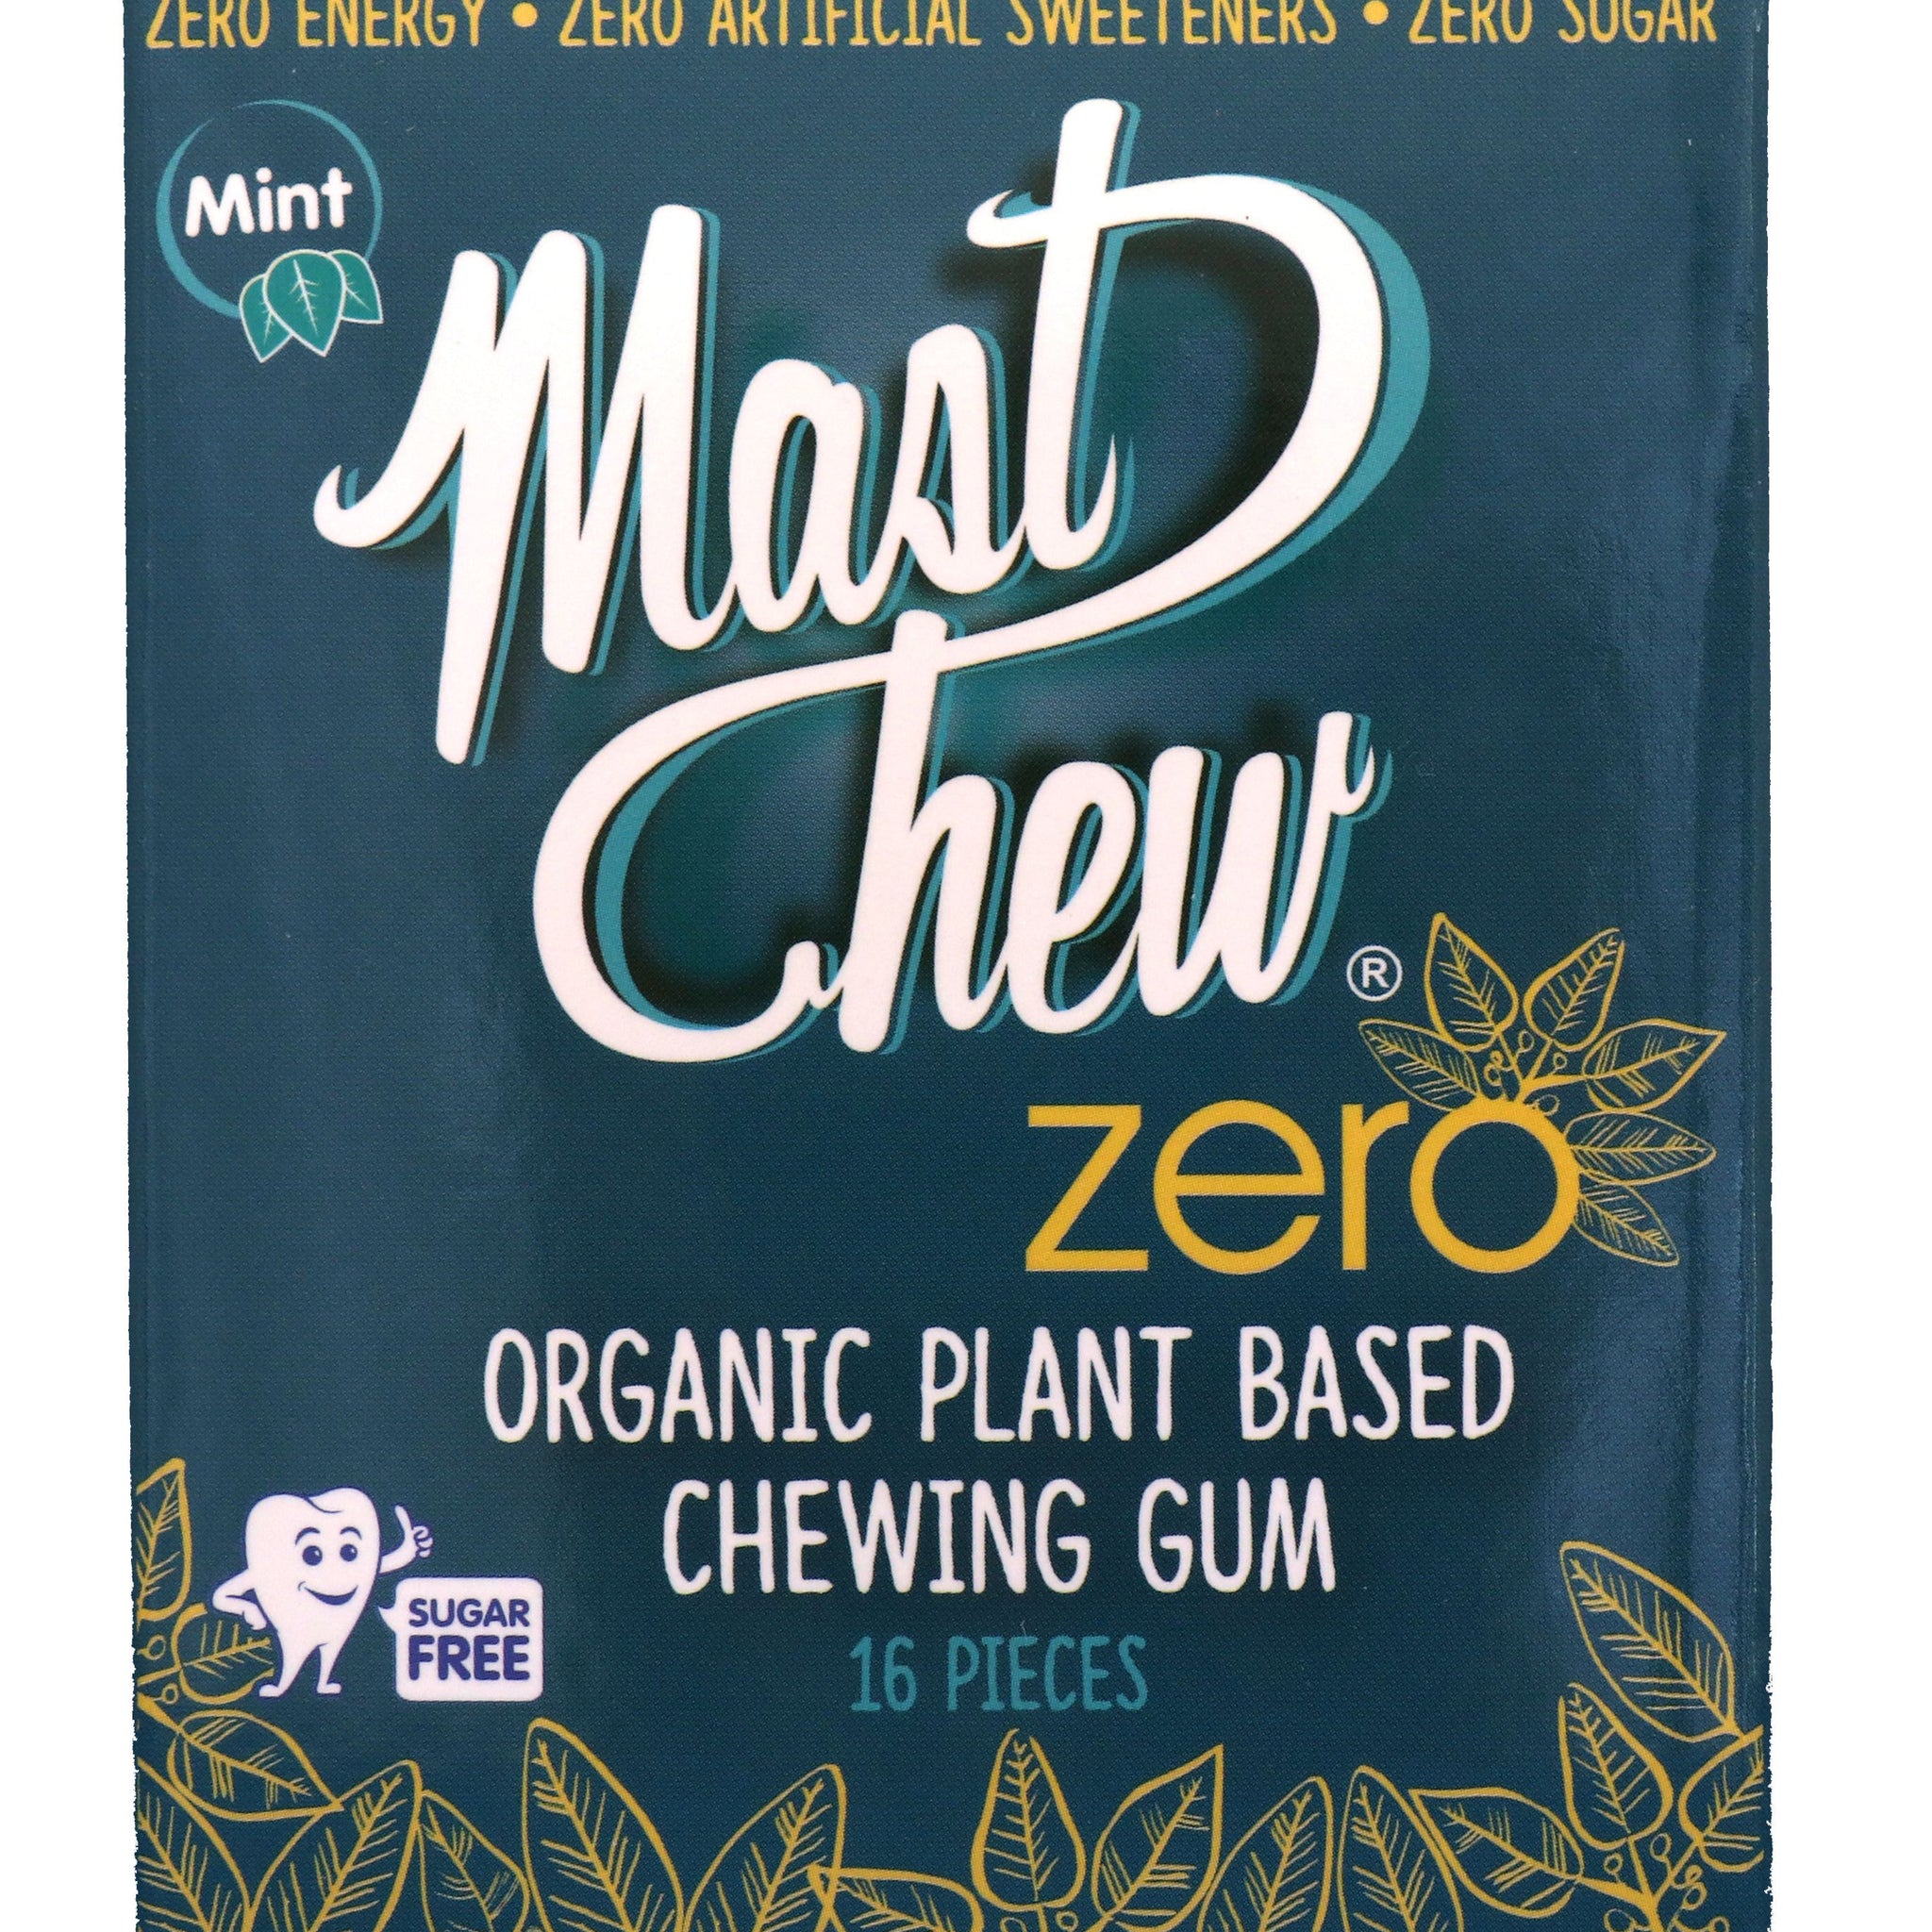 Mast Chew Organic Plant Based Chewing Gum Mint Zero 16 pieces